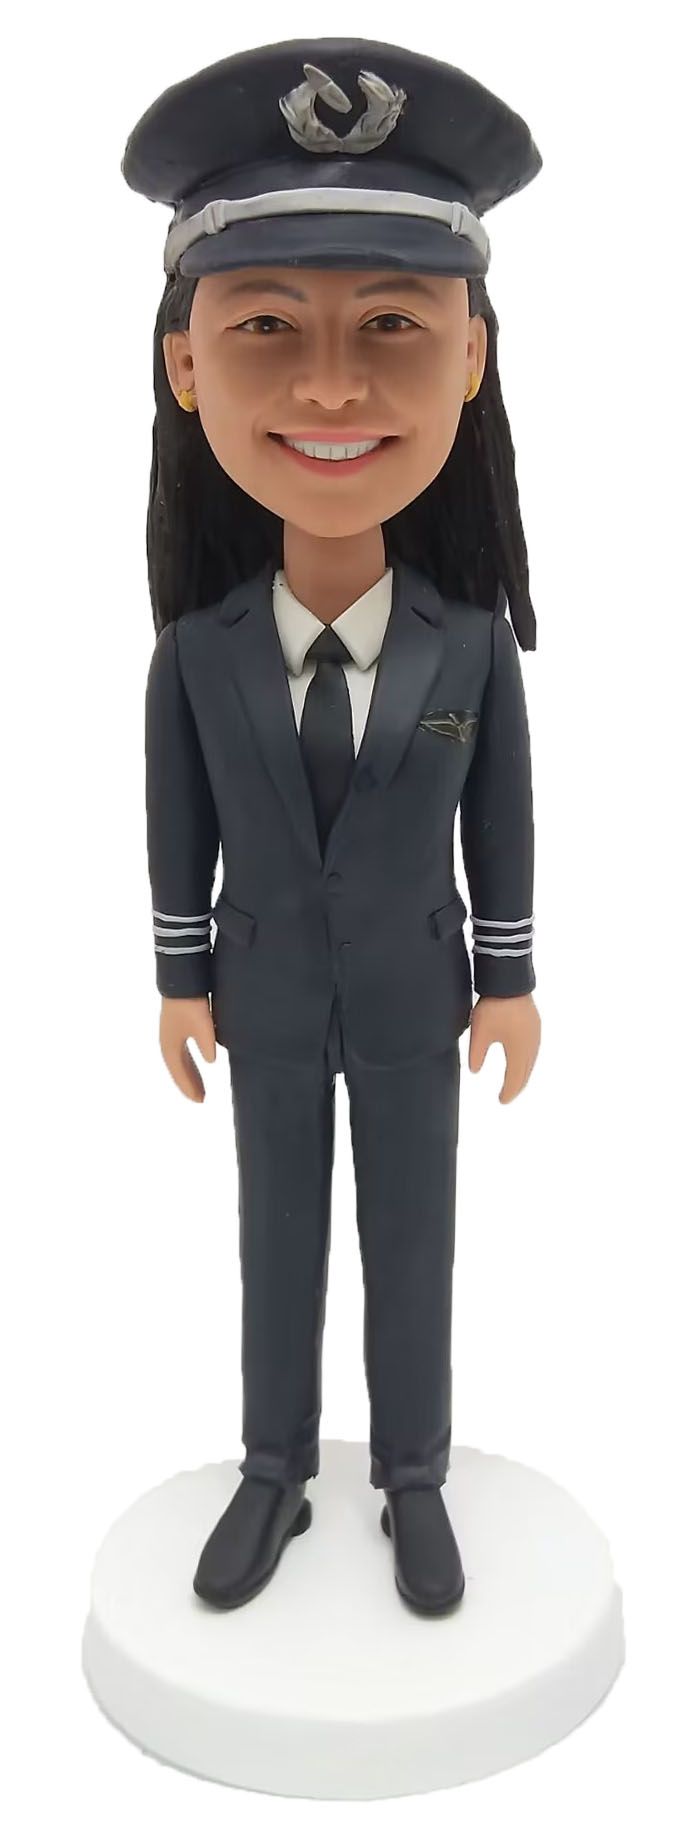 Personalized Bobblehead Pilot